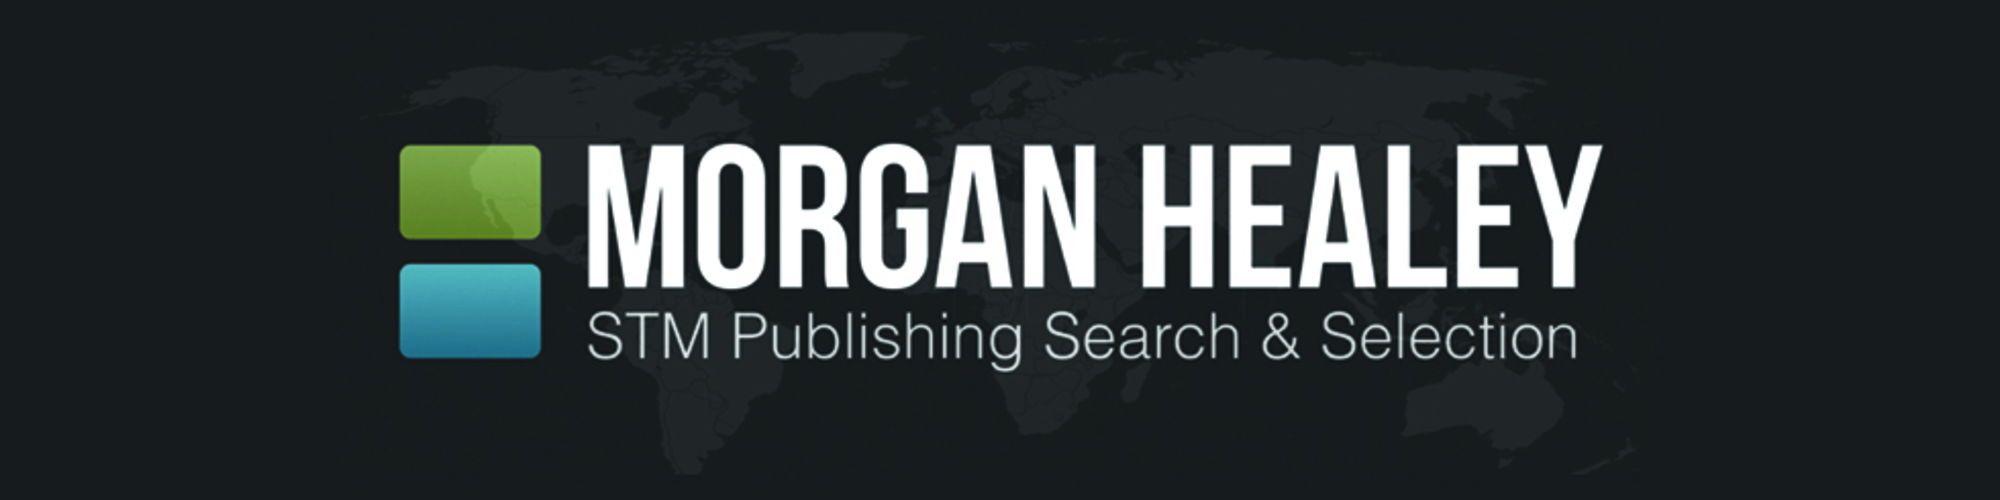 Bookseller Logo - Morgan Healey | The Bookseller Careers & Jobs